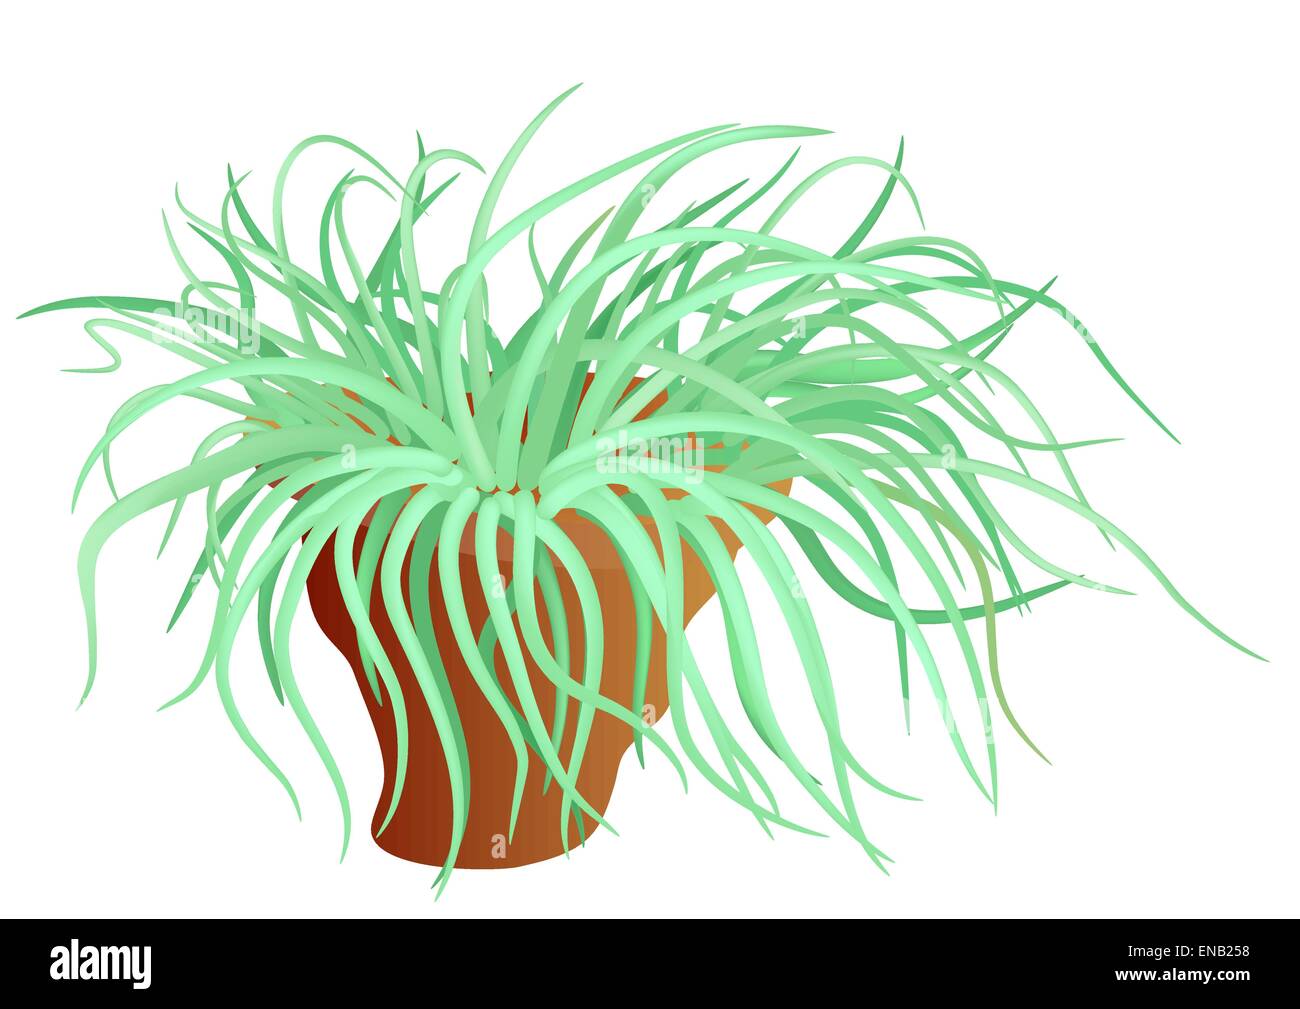 Anémone de mer - sea flower - vector Illustration de Vecteur